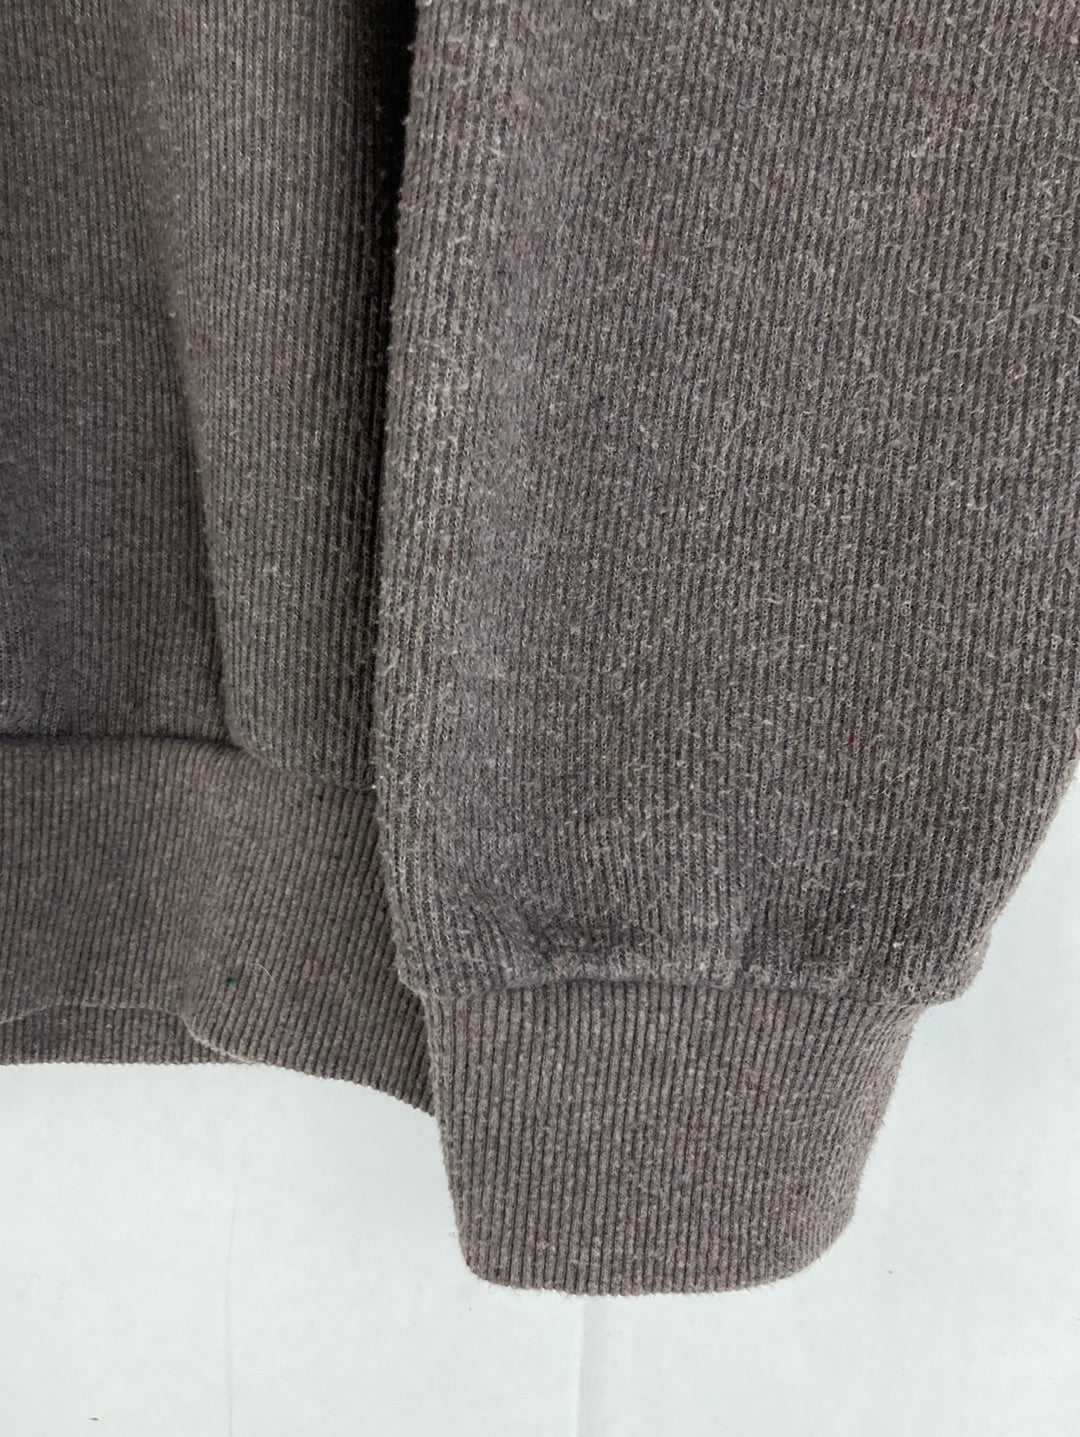 Gant Sweater (S)